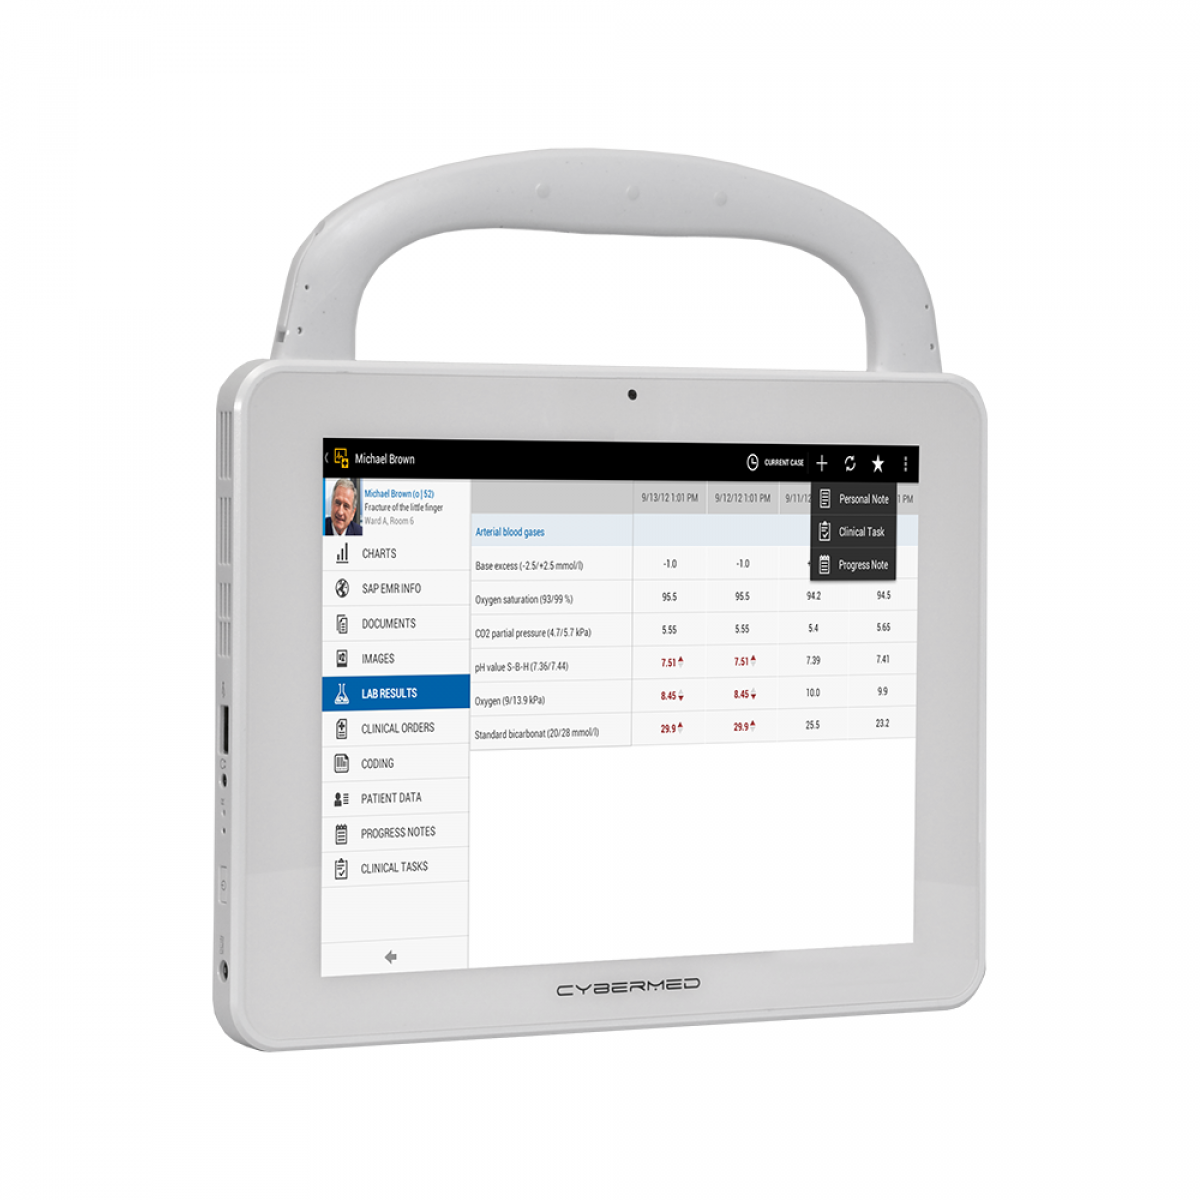 CyberMed T10 medicall certified windows tablet